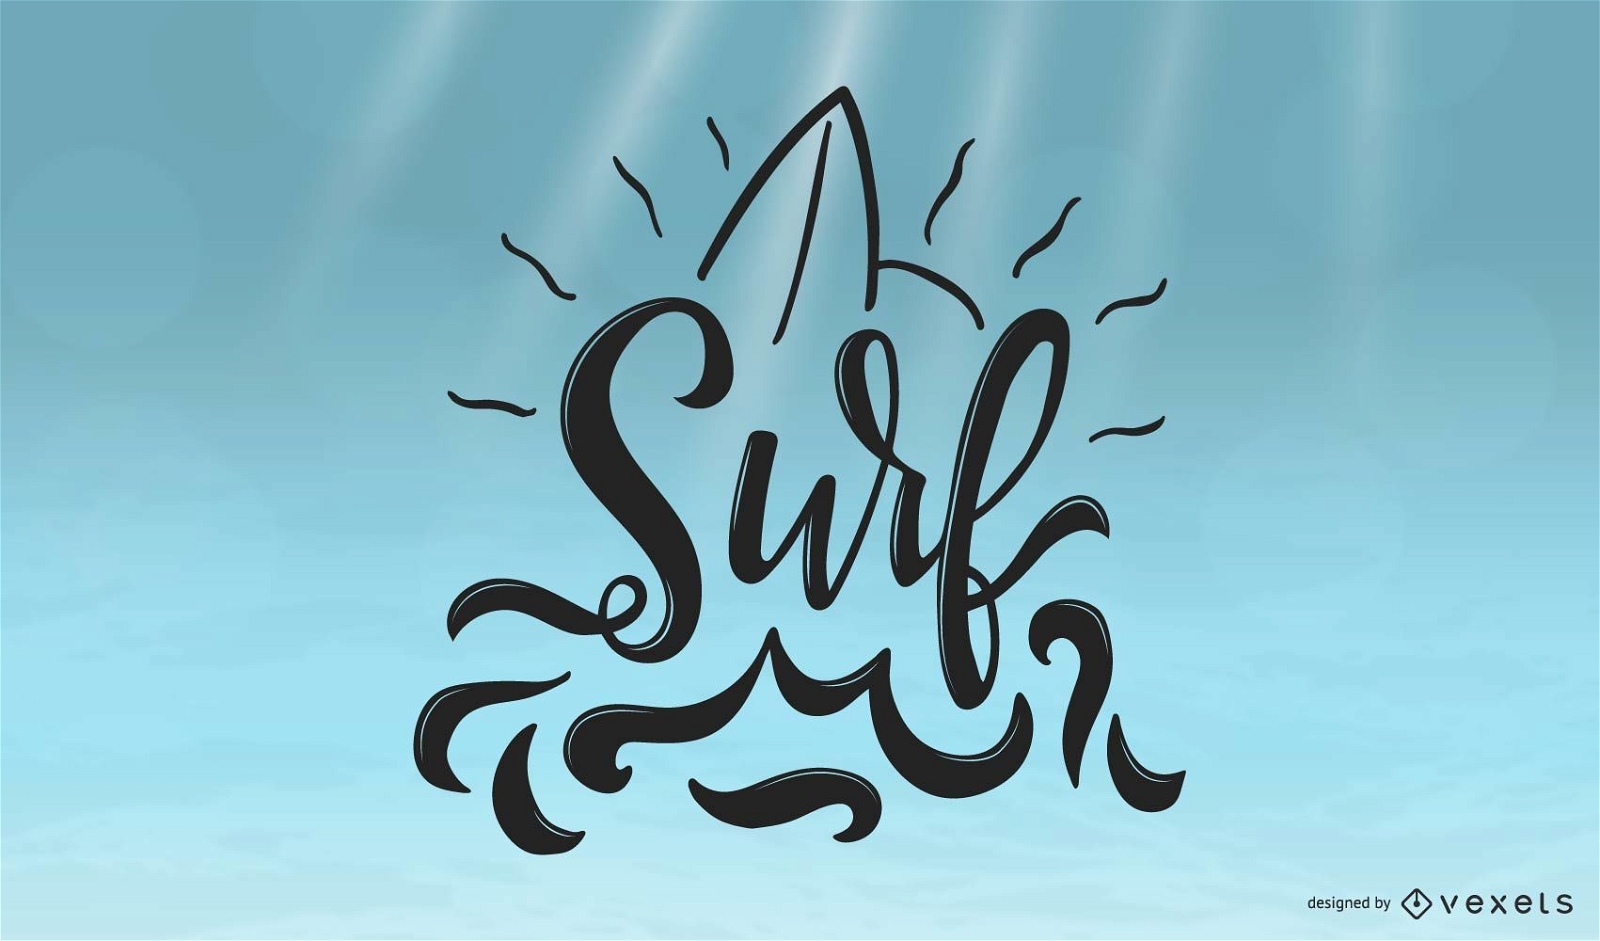 Letras Cool Surf